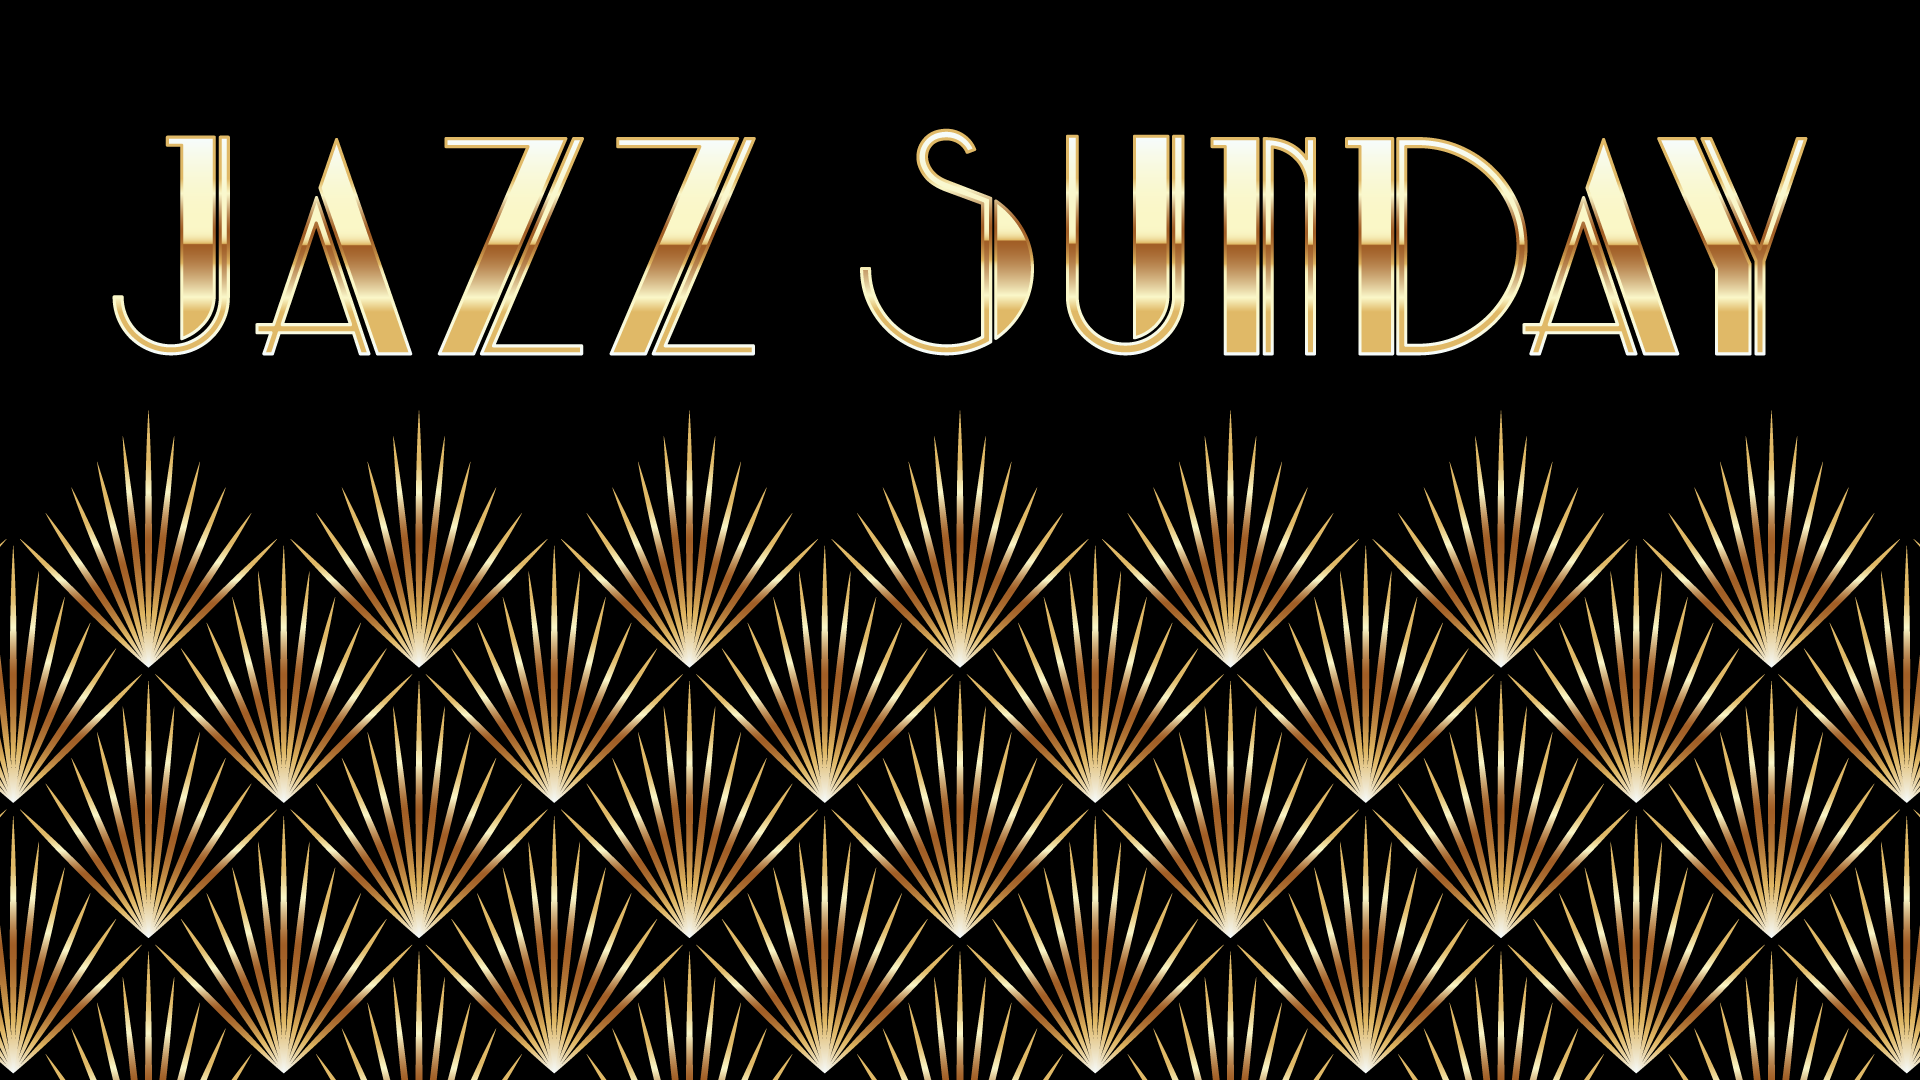 Traditional Service: “Jazz Sunday